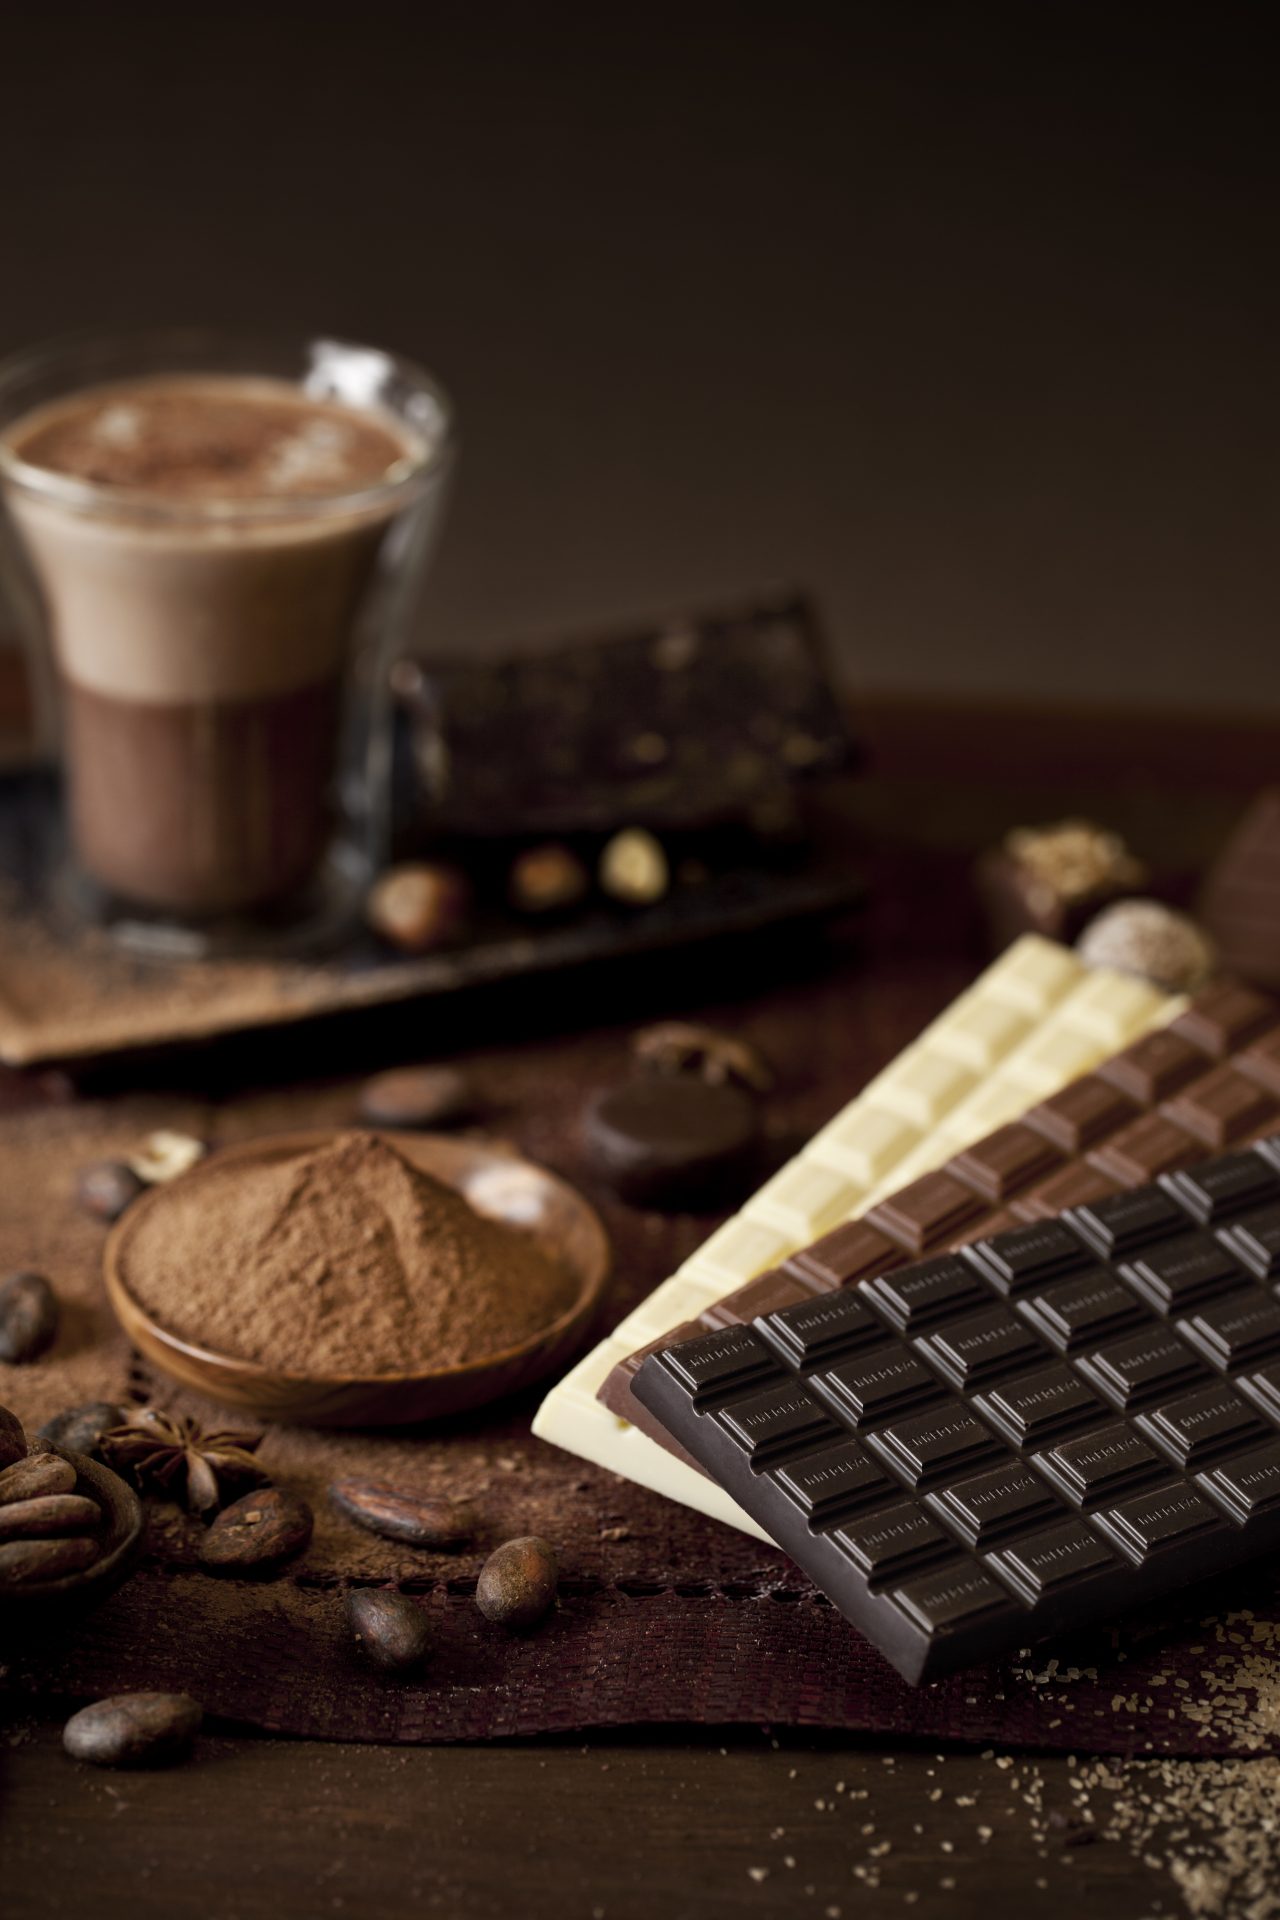 Chocolaterie Dardenne Ausson Visite Musée Chocolat Pyrénées